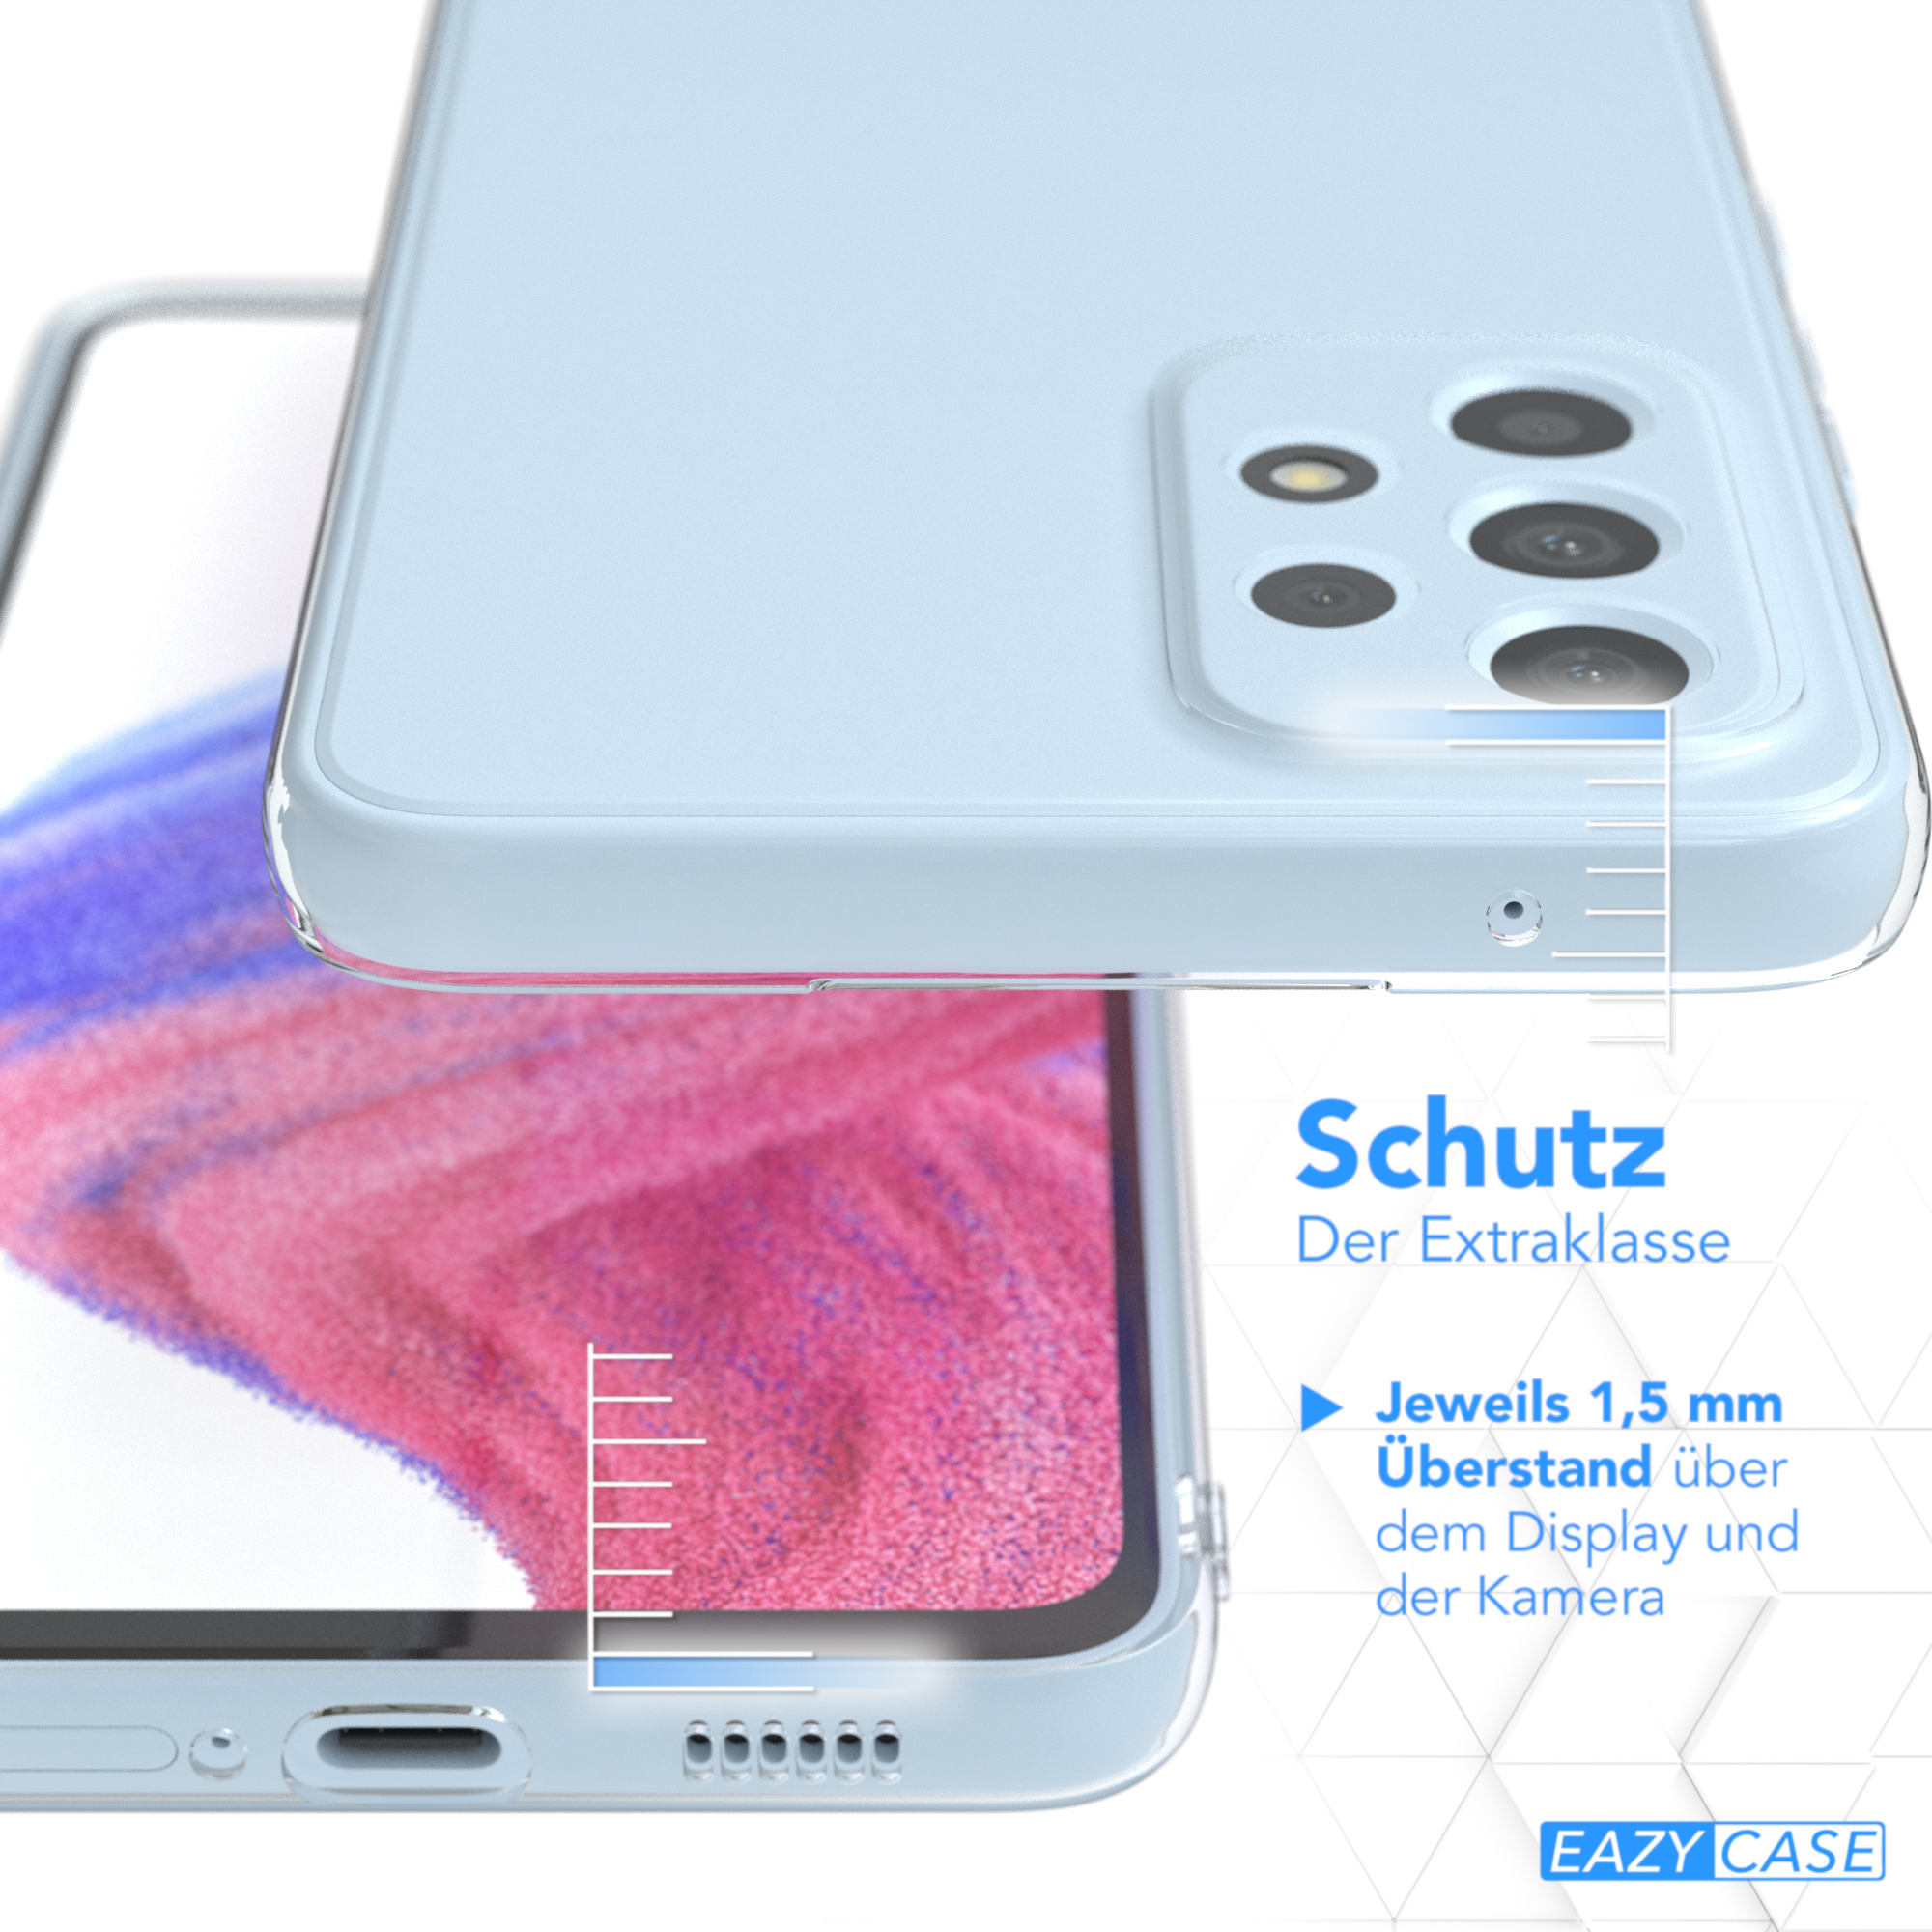 Slimcover CASE 5G, Clear, Durchsichtig Backcover, EAZY Galaxy Samsung, A53